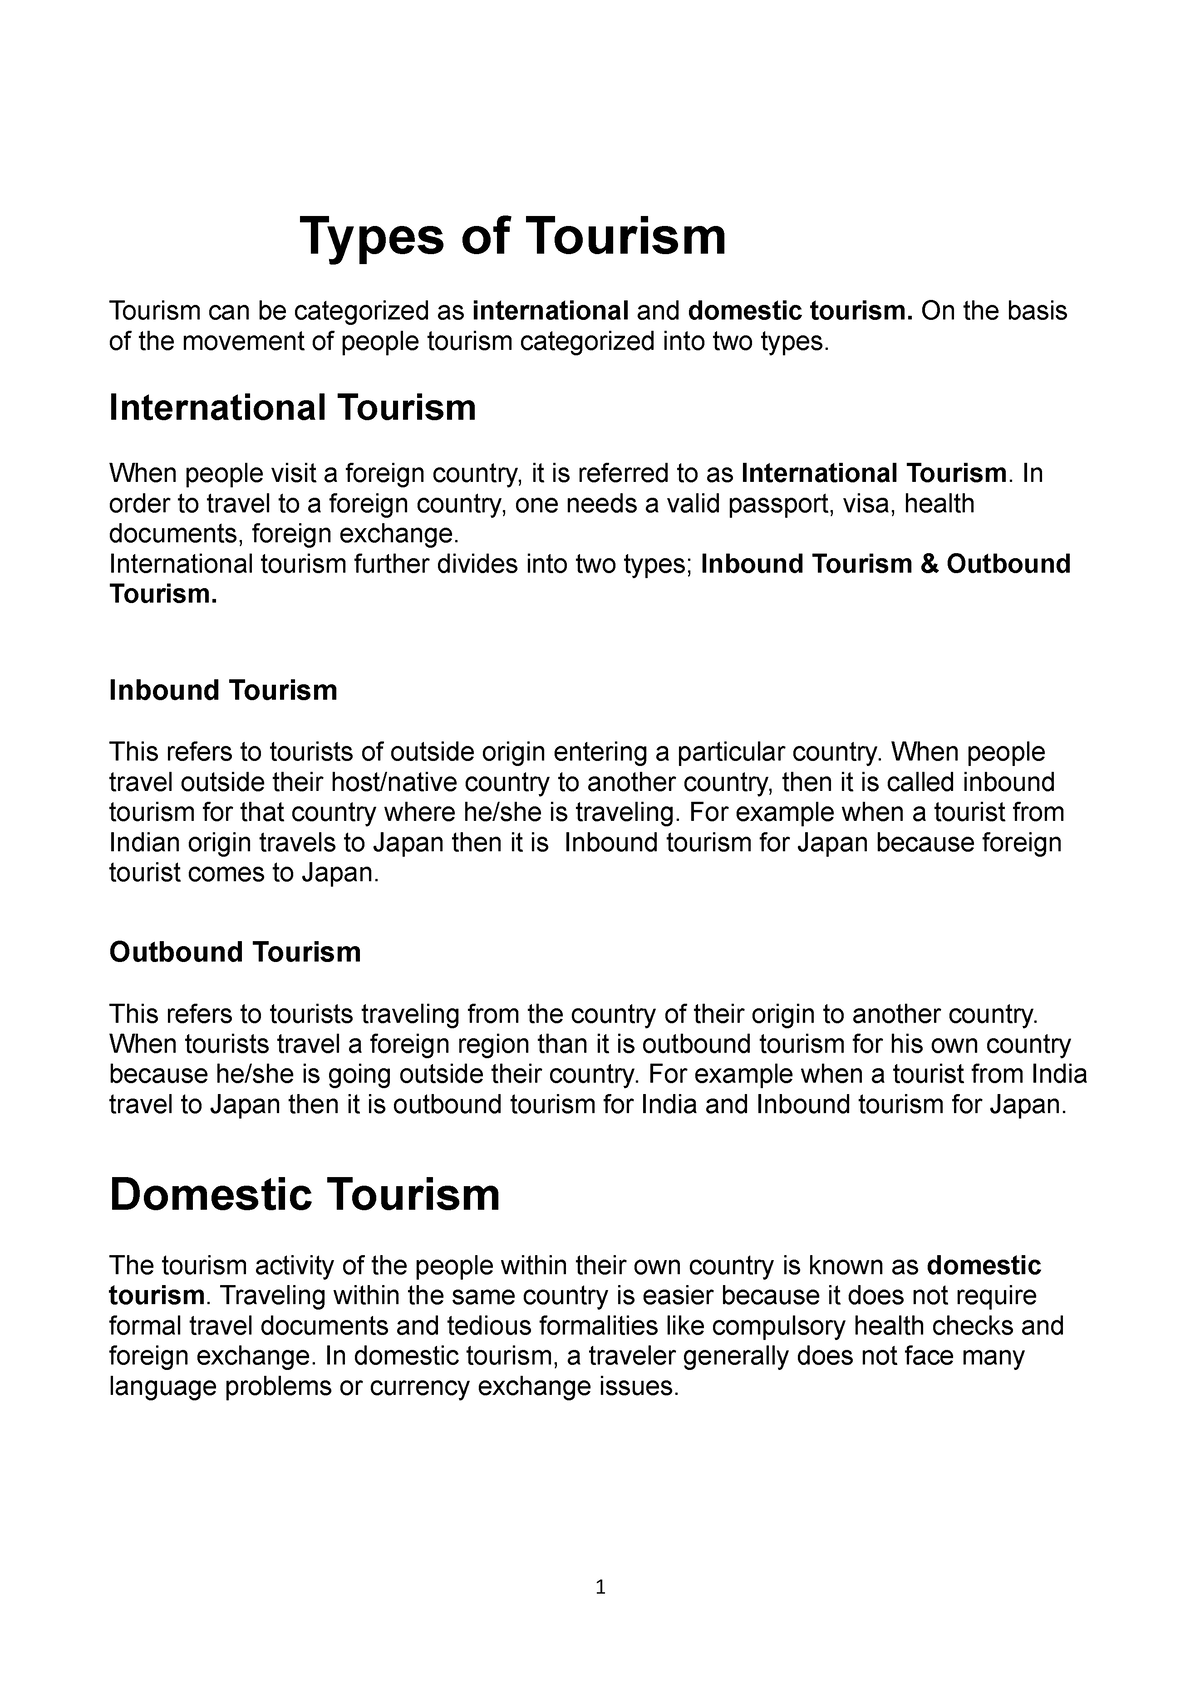 essay types of tourism